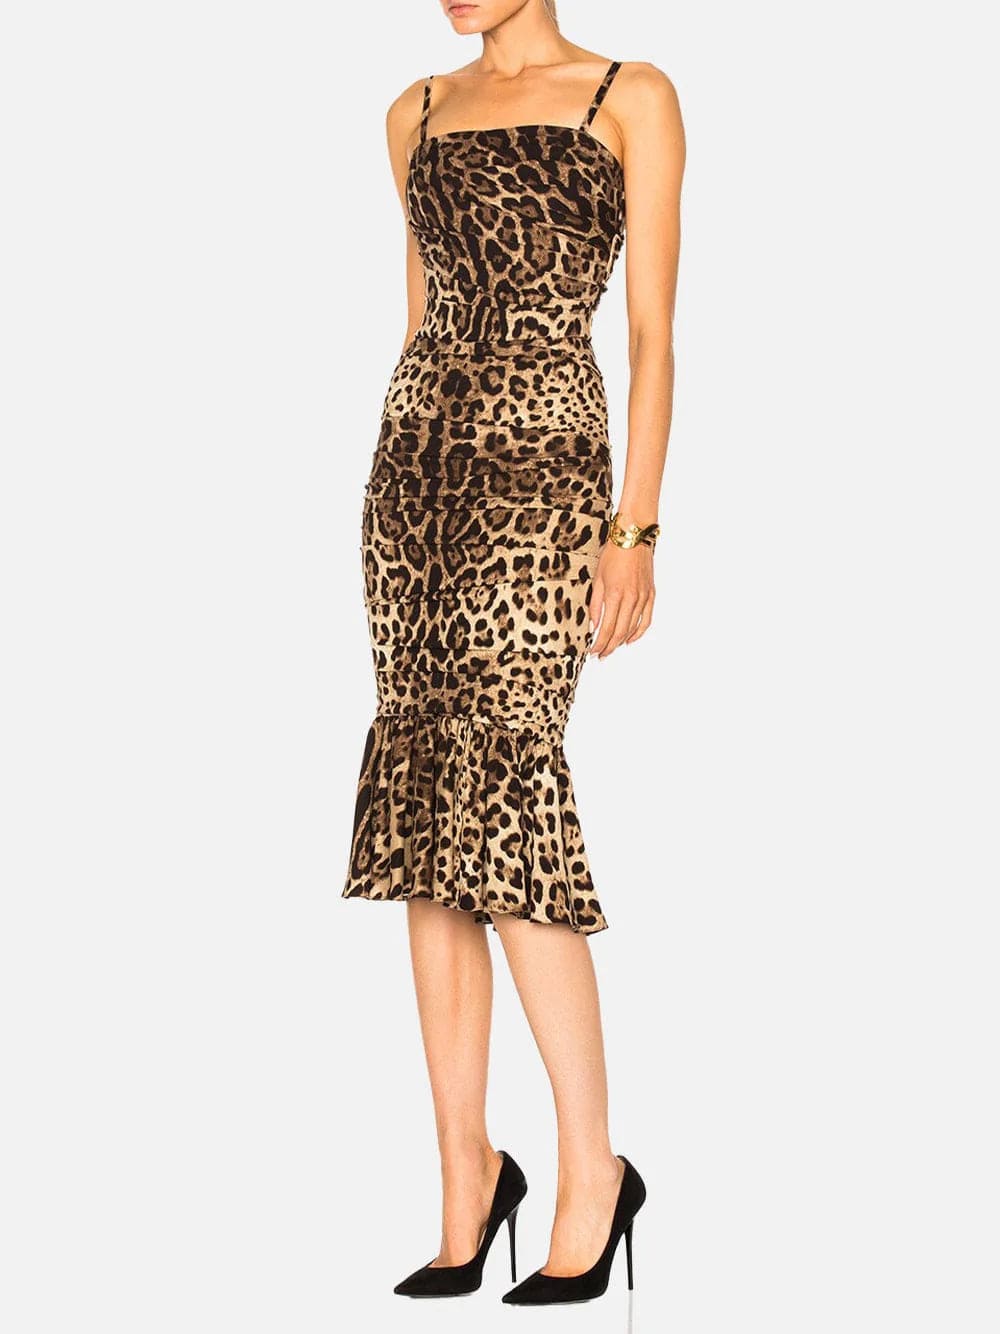 Dolce & Gabbana Cady Stretch Leopard Print Dress